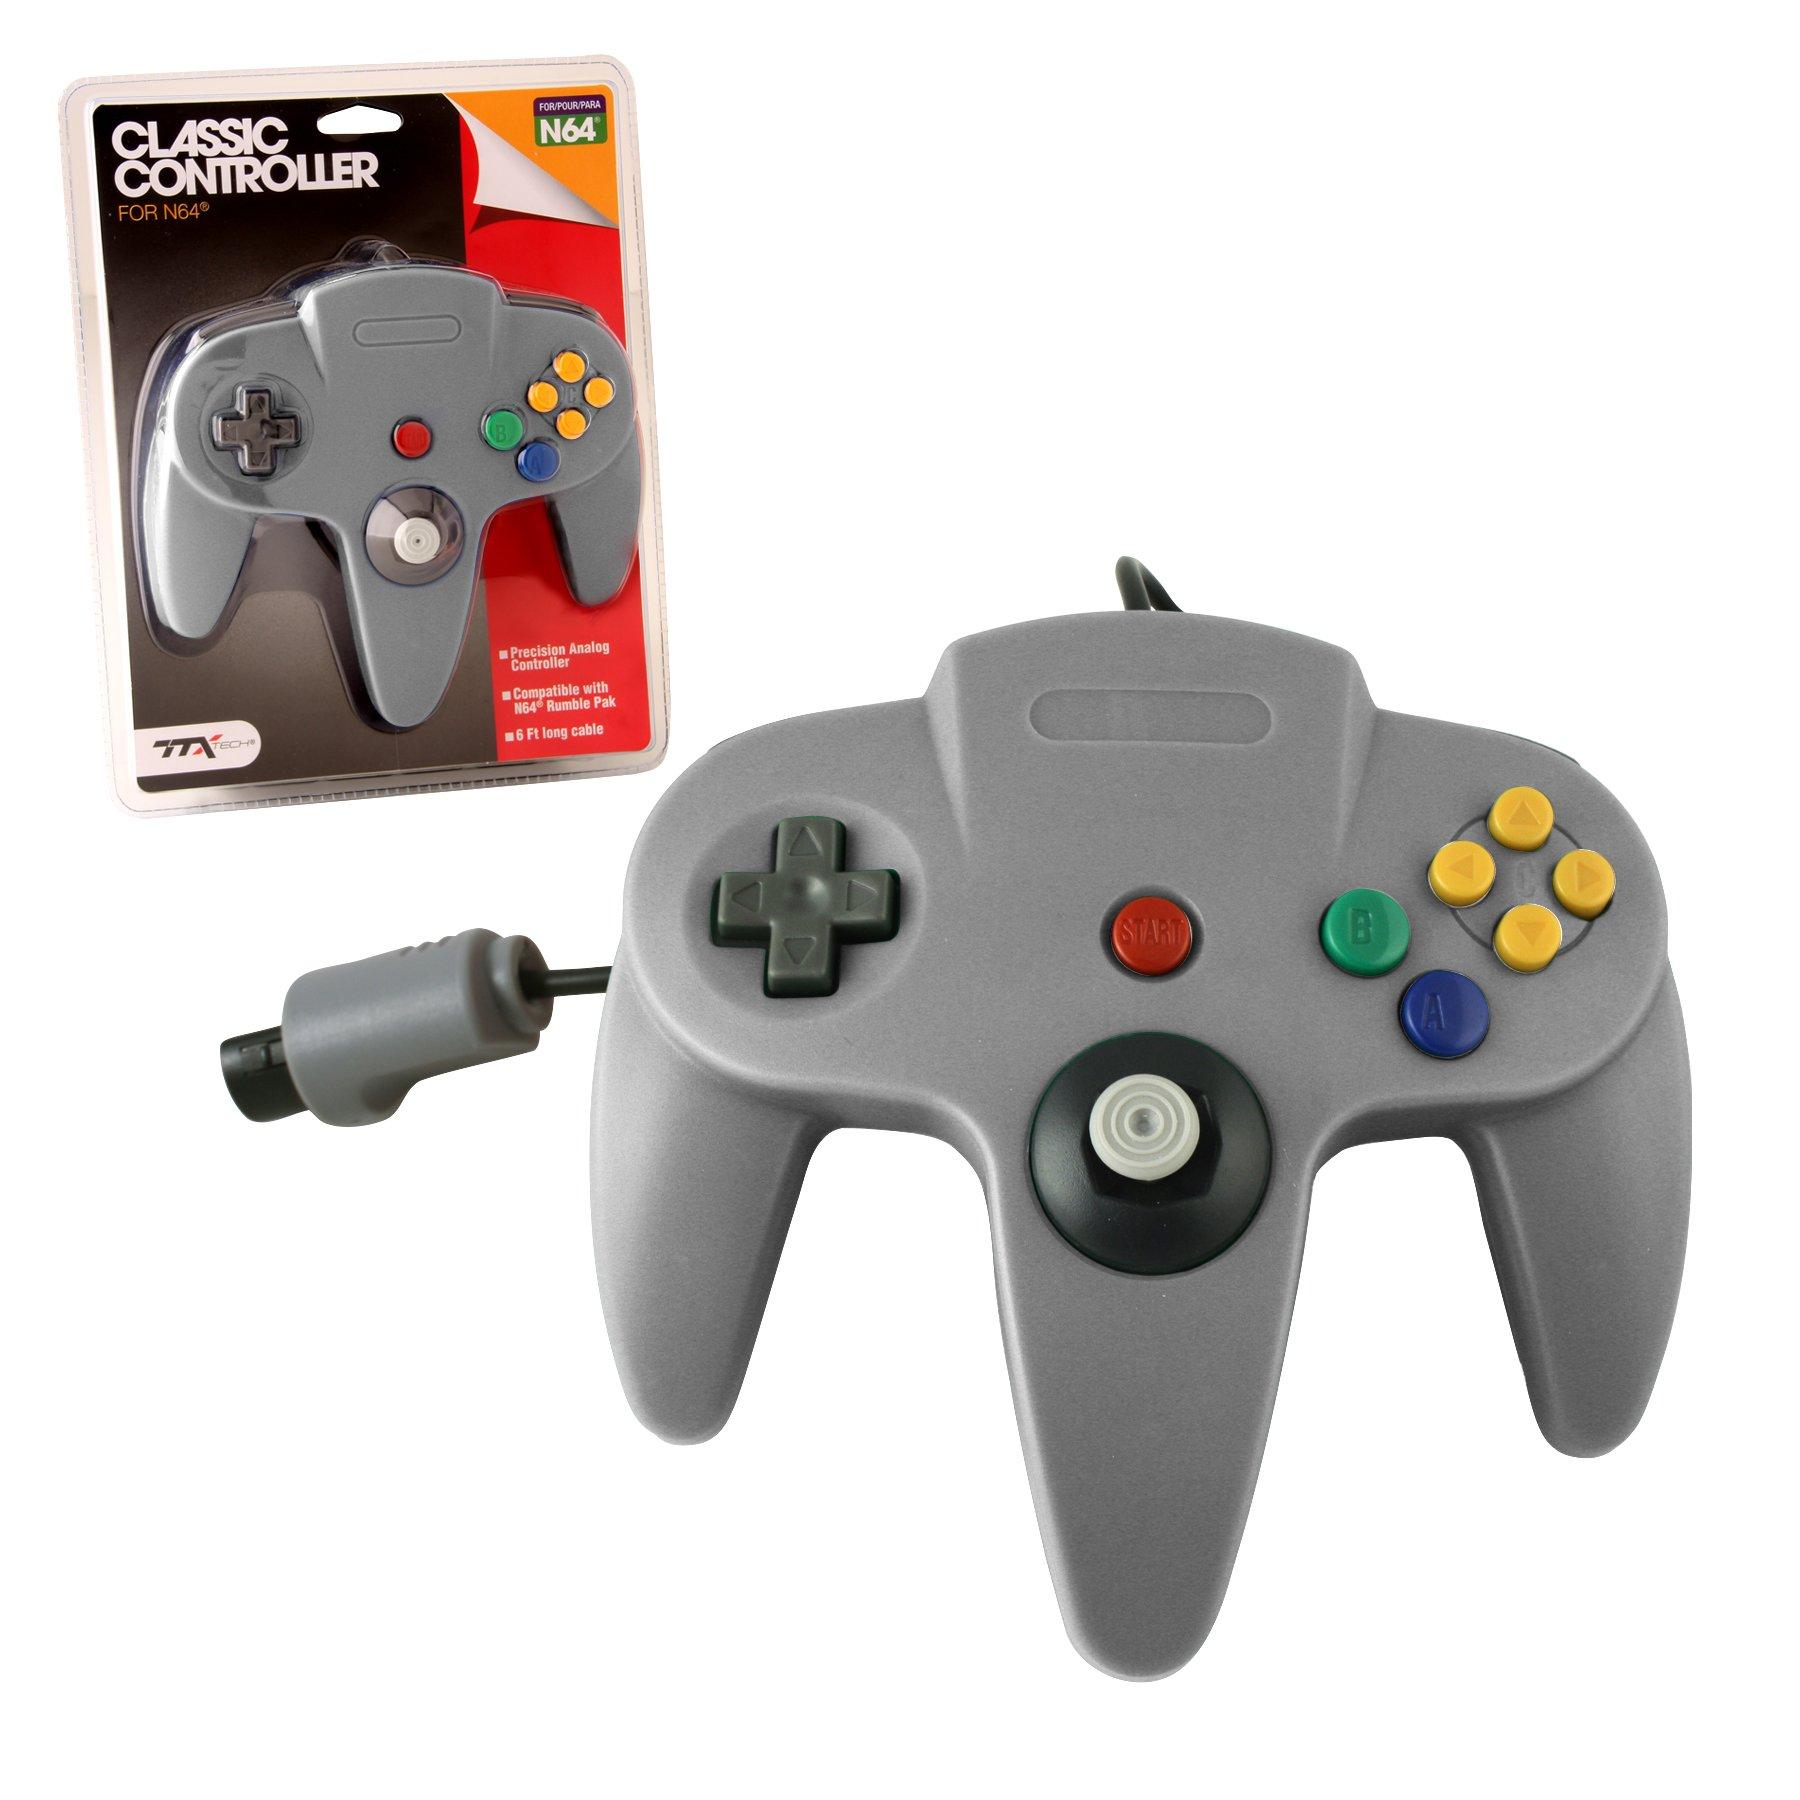 n64 classic controller